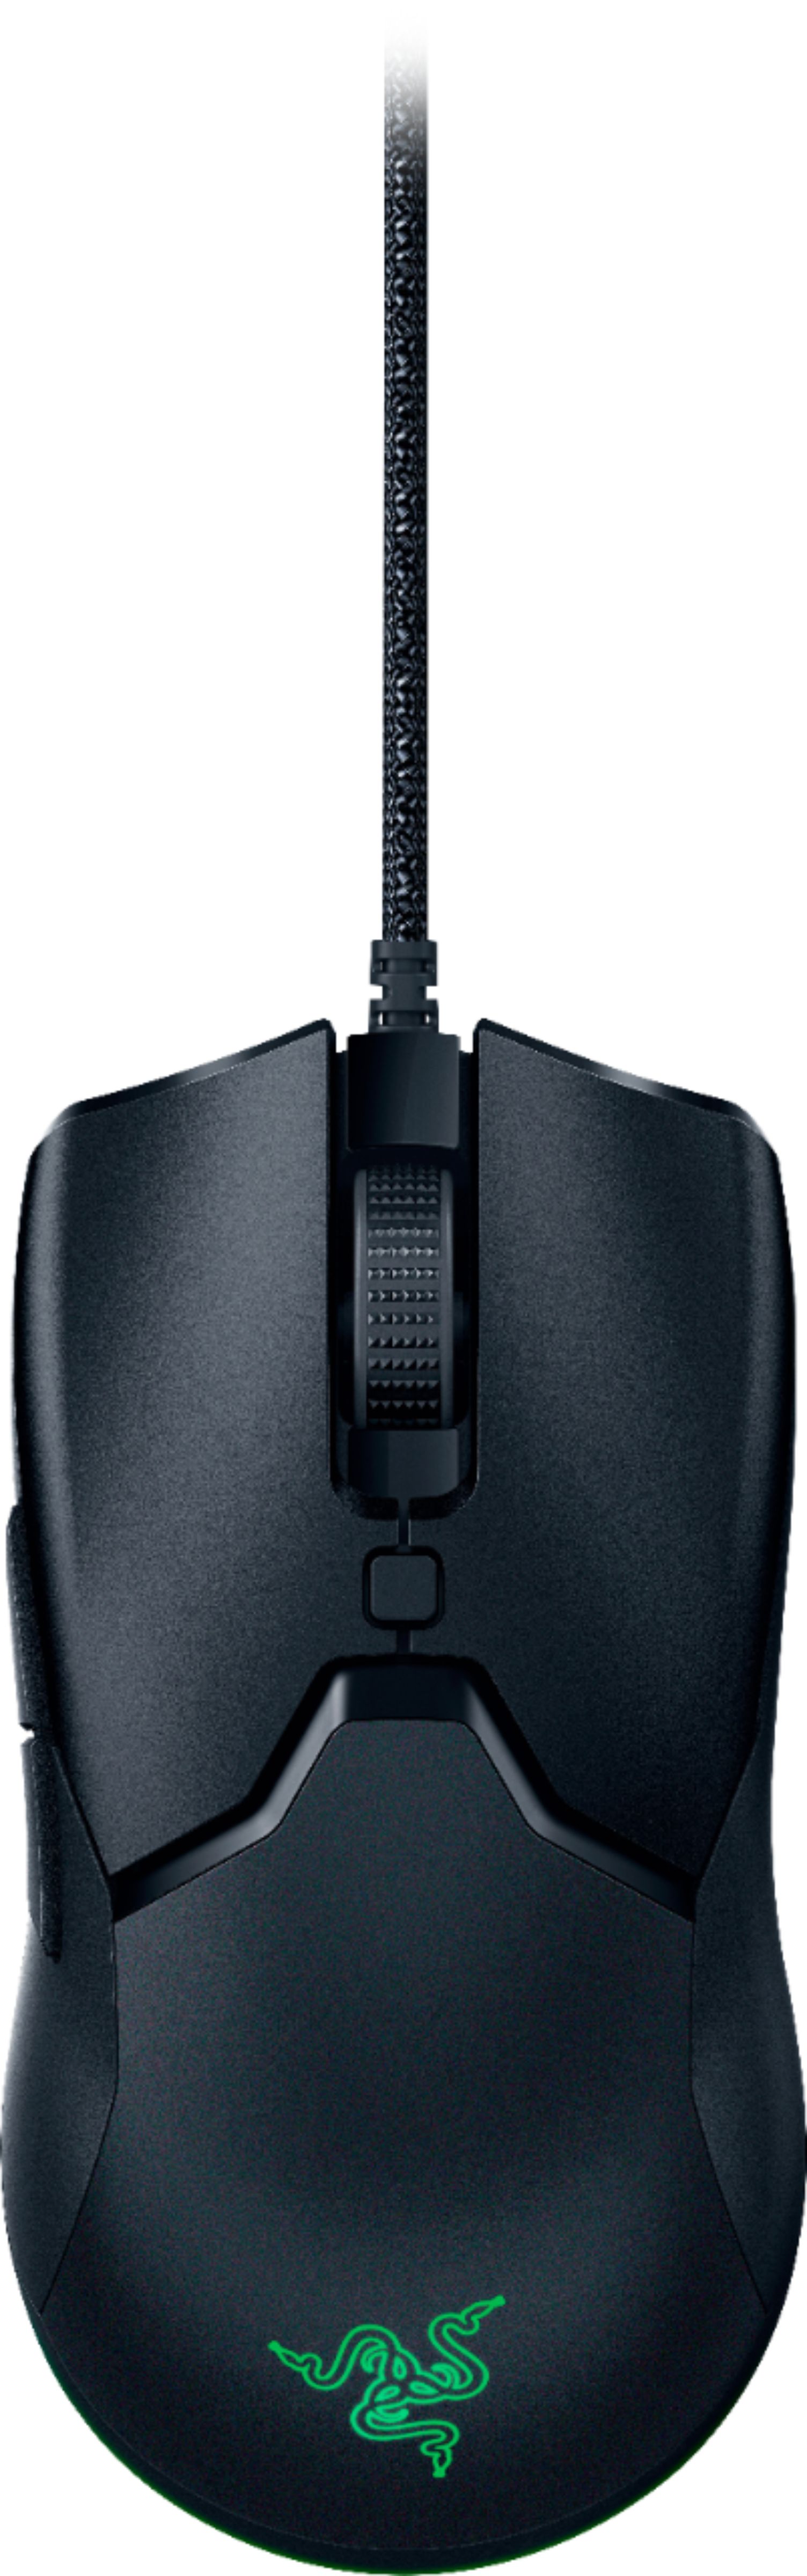 Razer - Viper Mini Wired Optical Gaming Mouse with Chroma RGB Lighting - Black